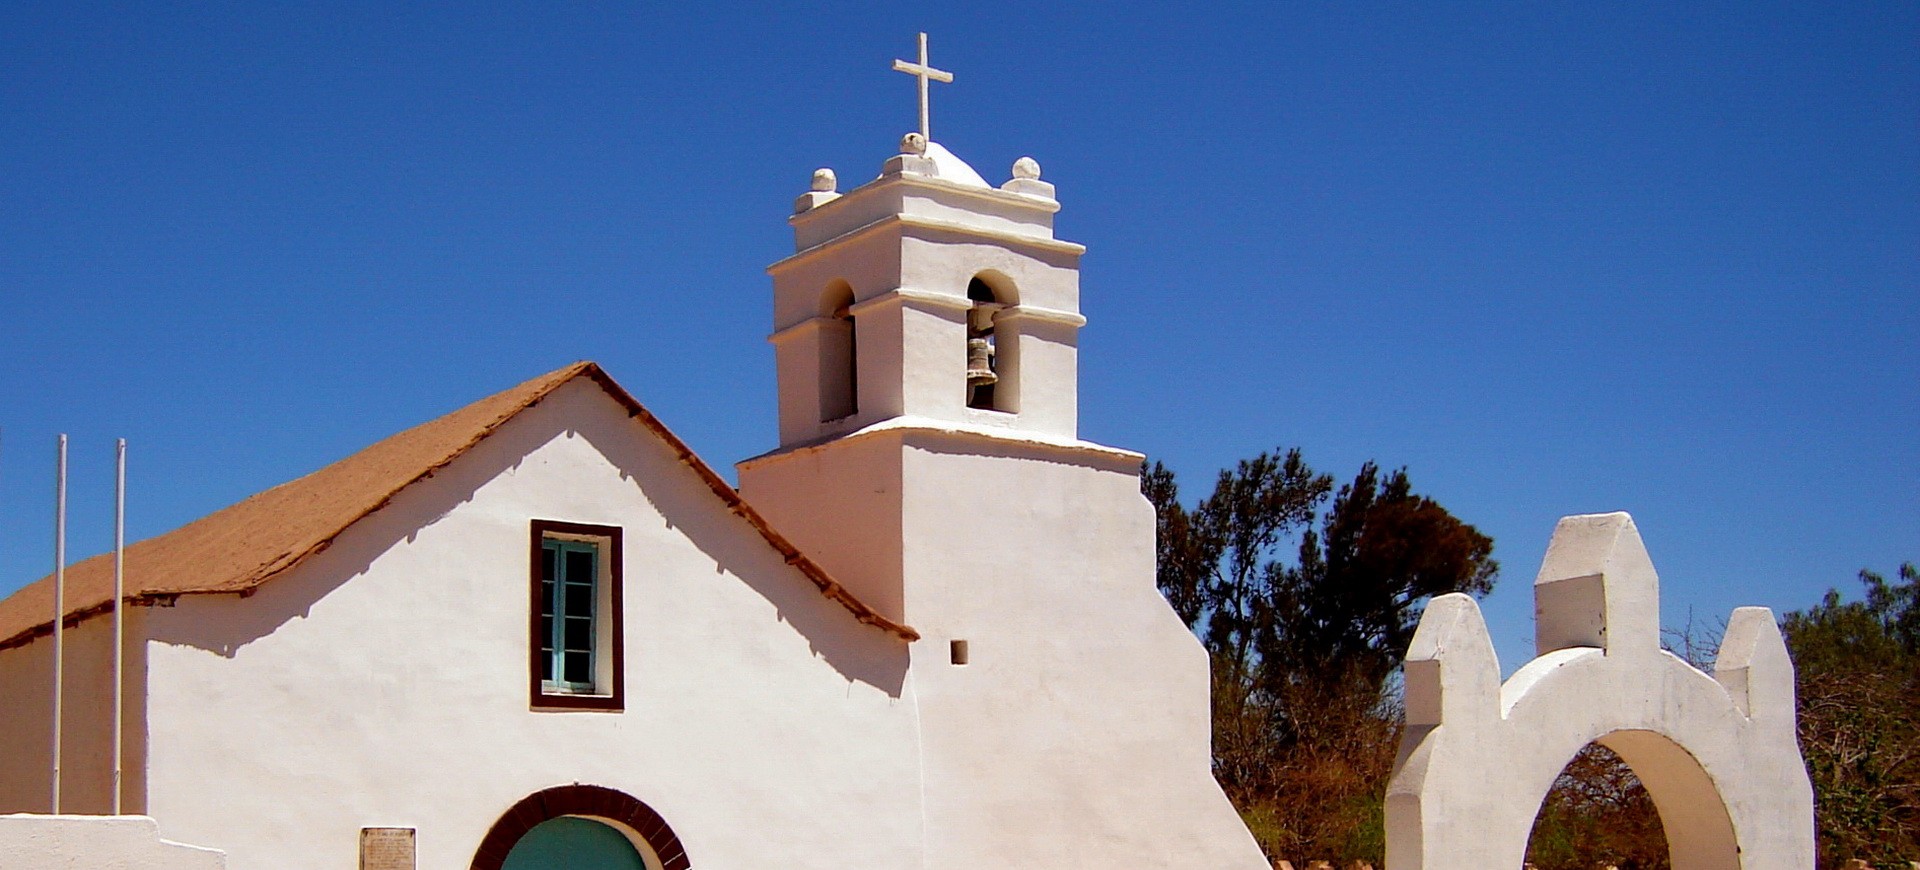 Chili Désert Atacama Eglise à San Pedro